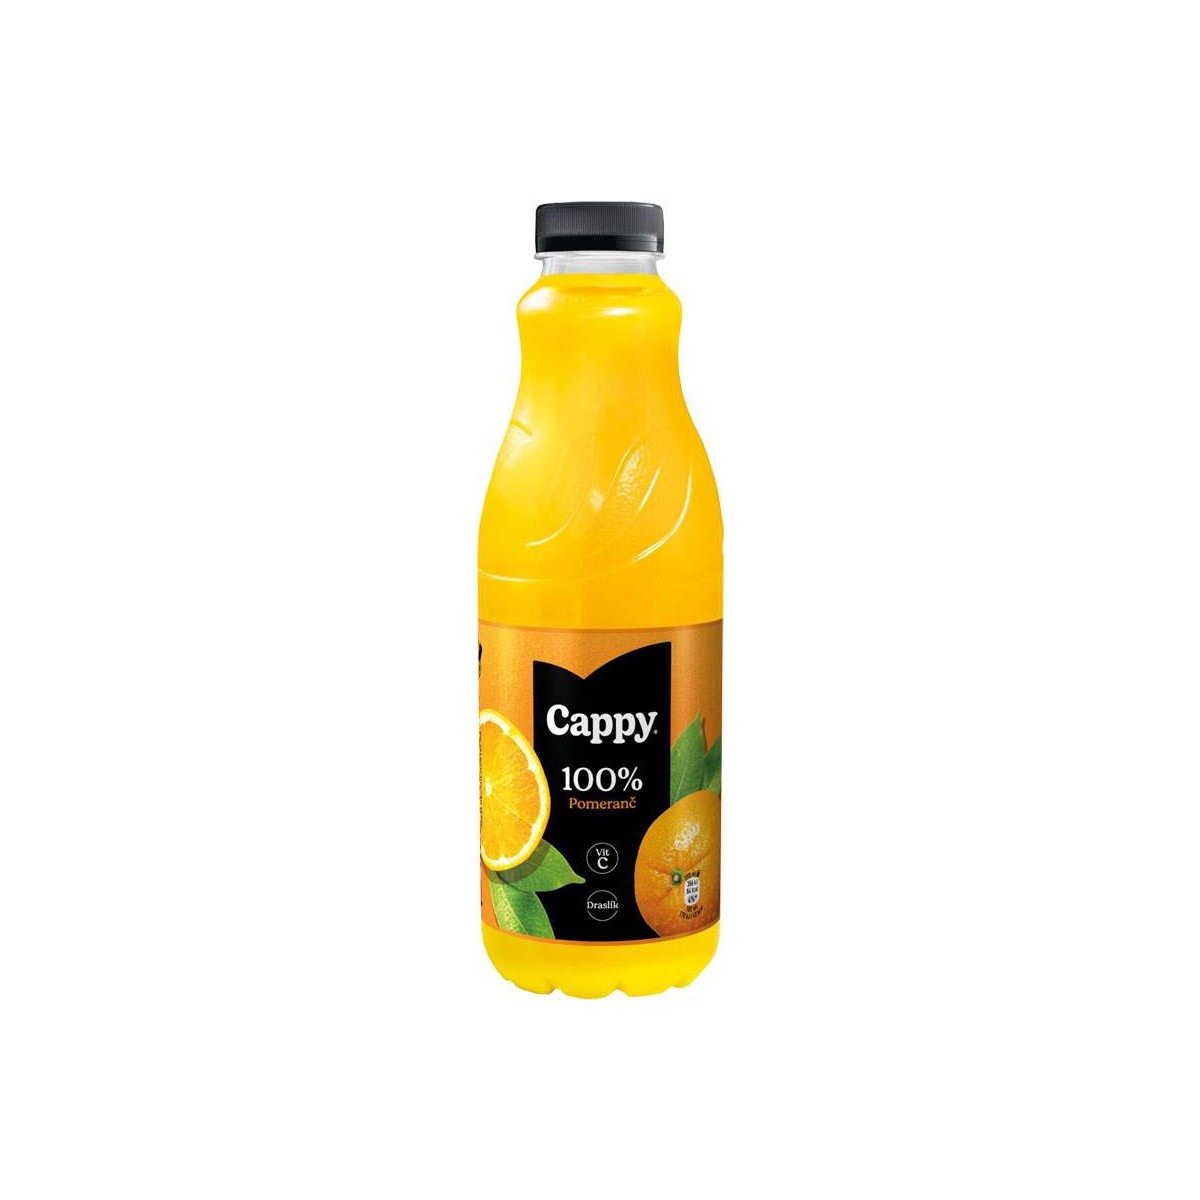 Cappy pomeranč 100% 1l - PET